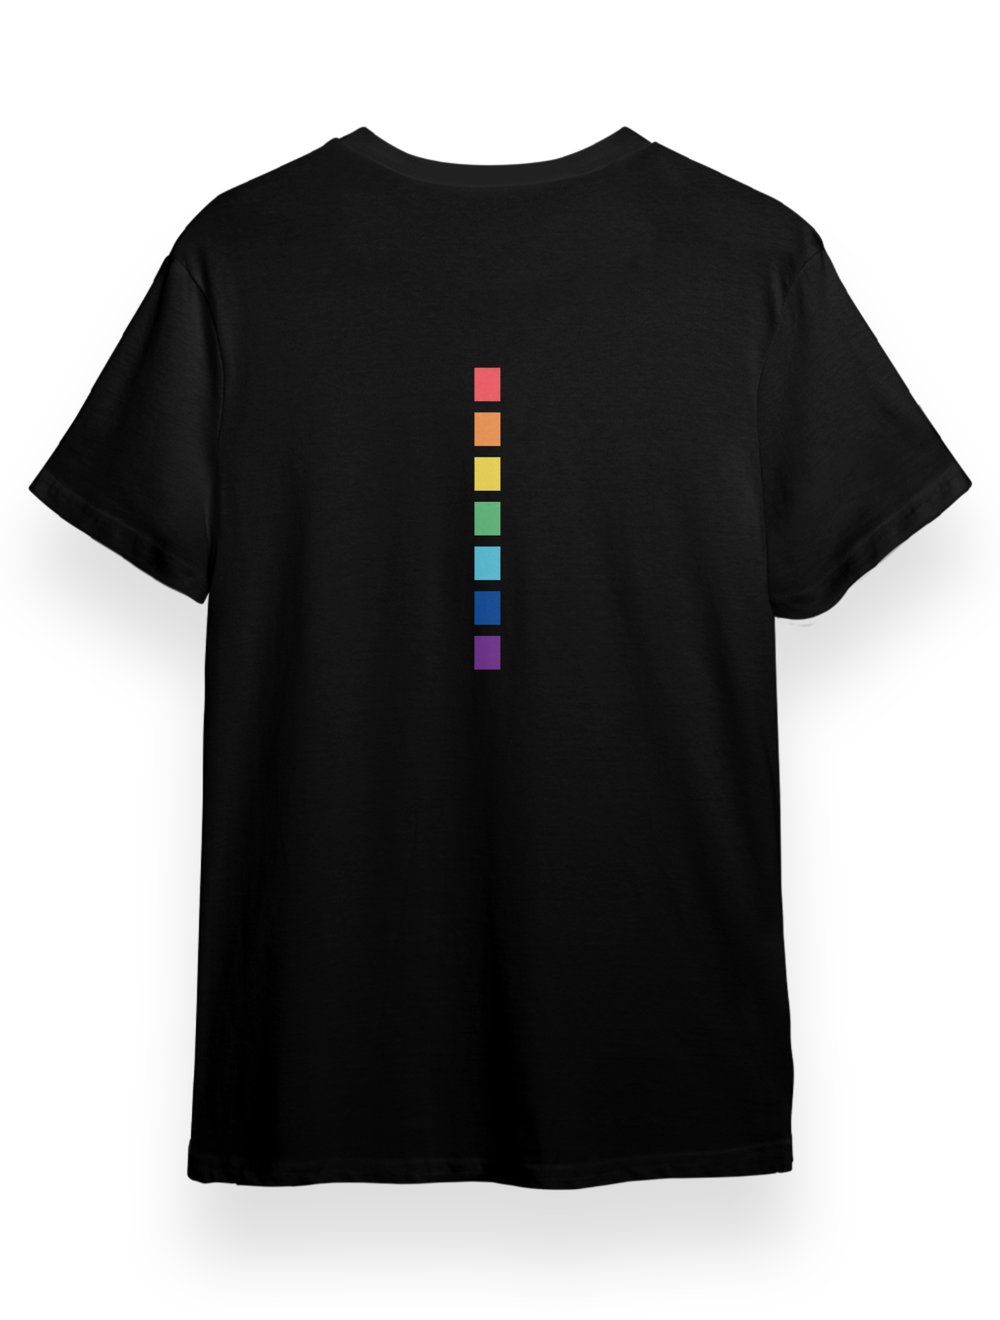 Velev T-Shirt Pride Sİyah